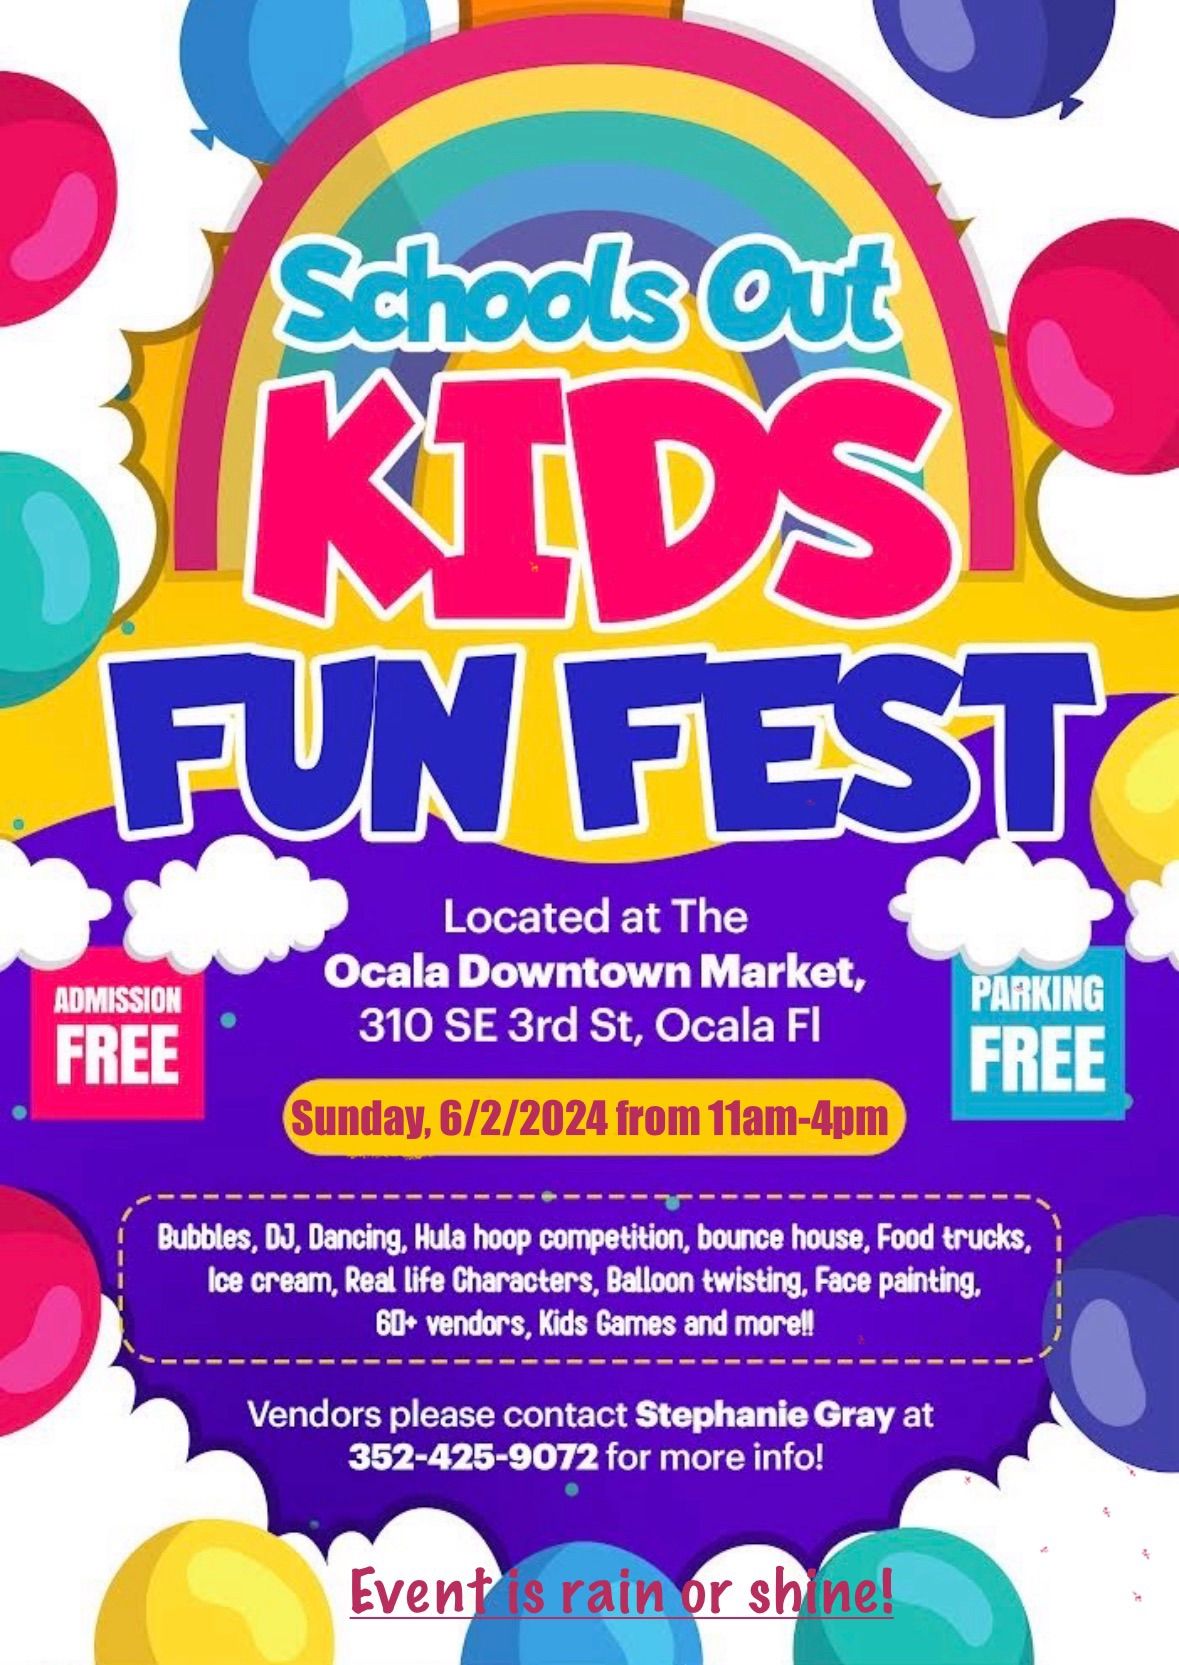 Schools Out Kids Fun Fest